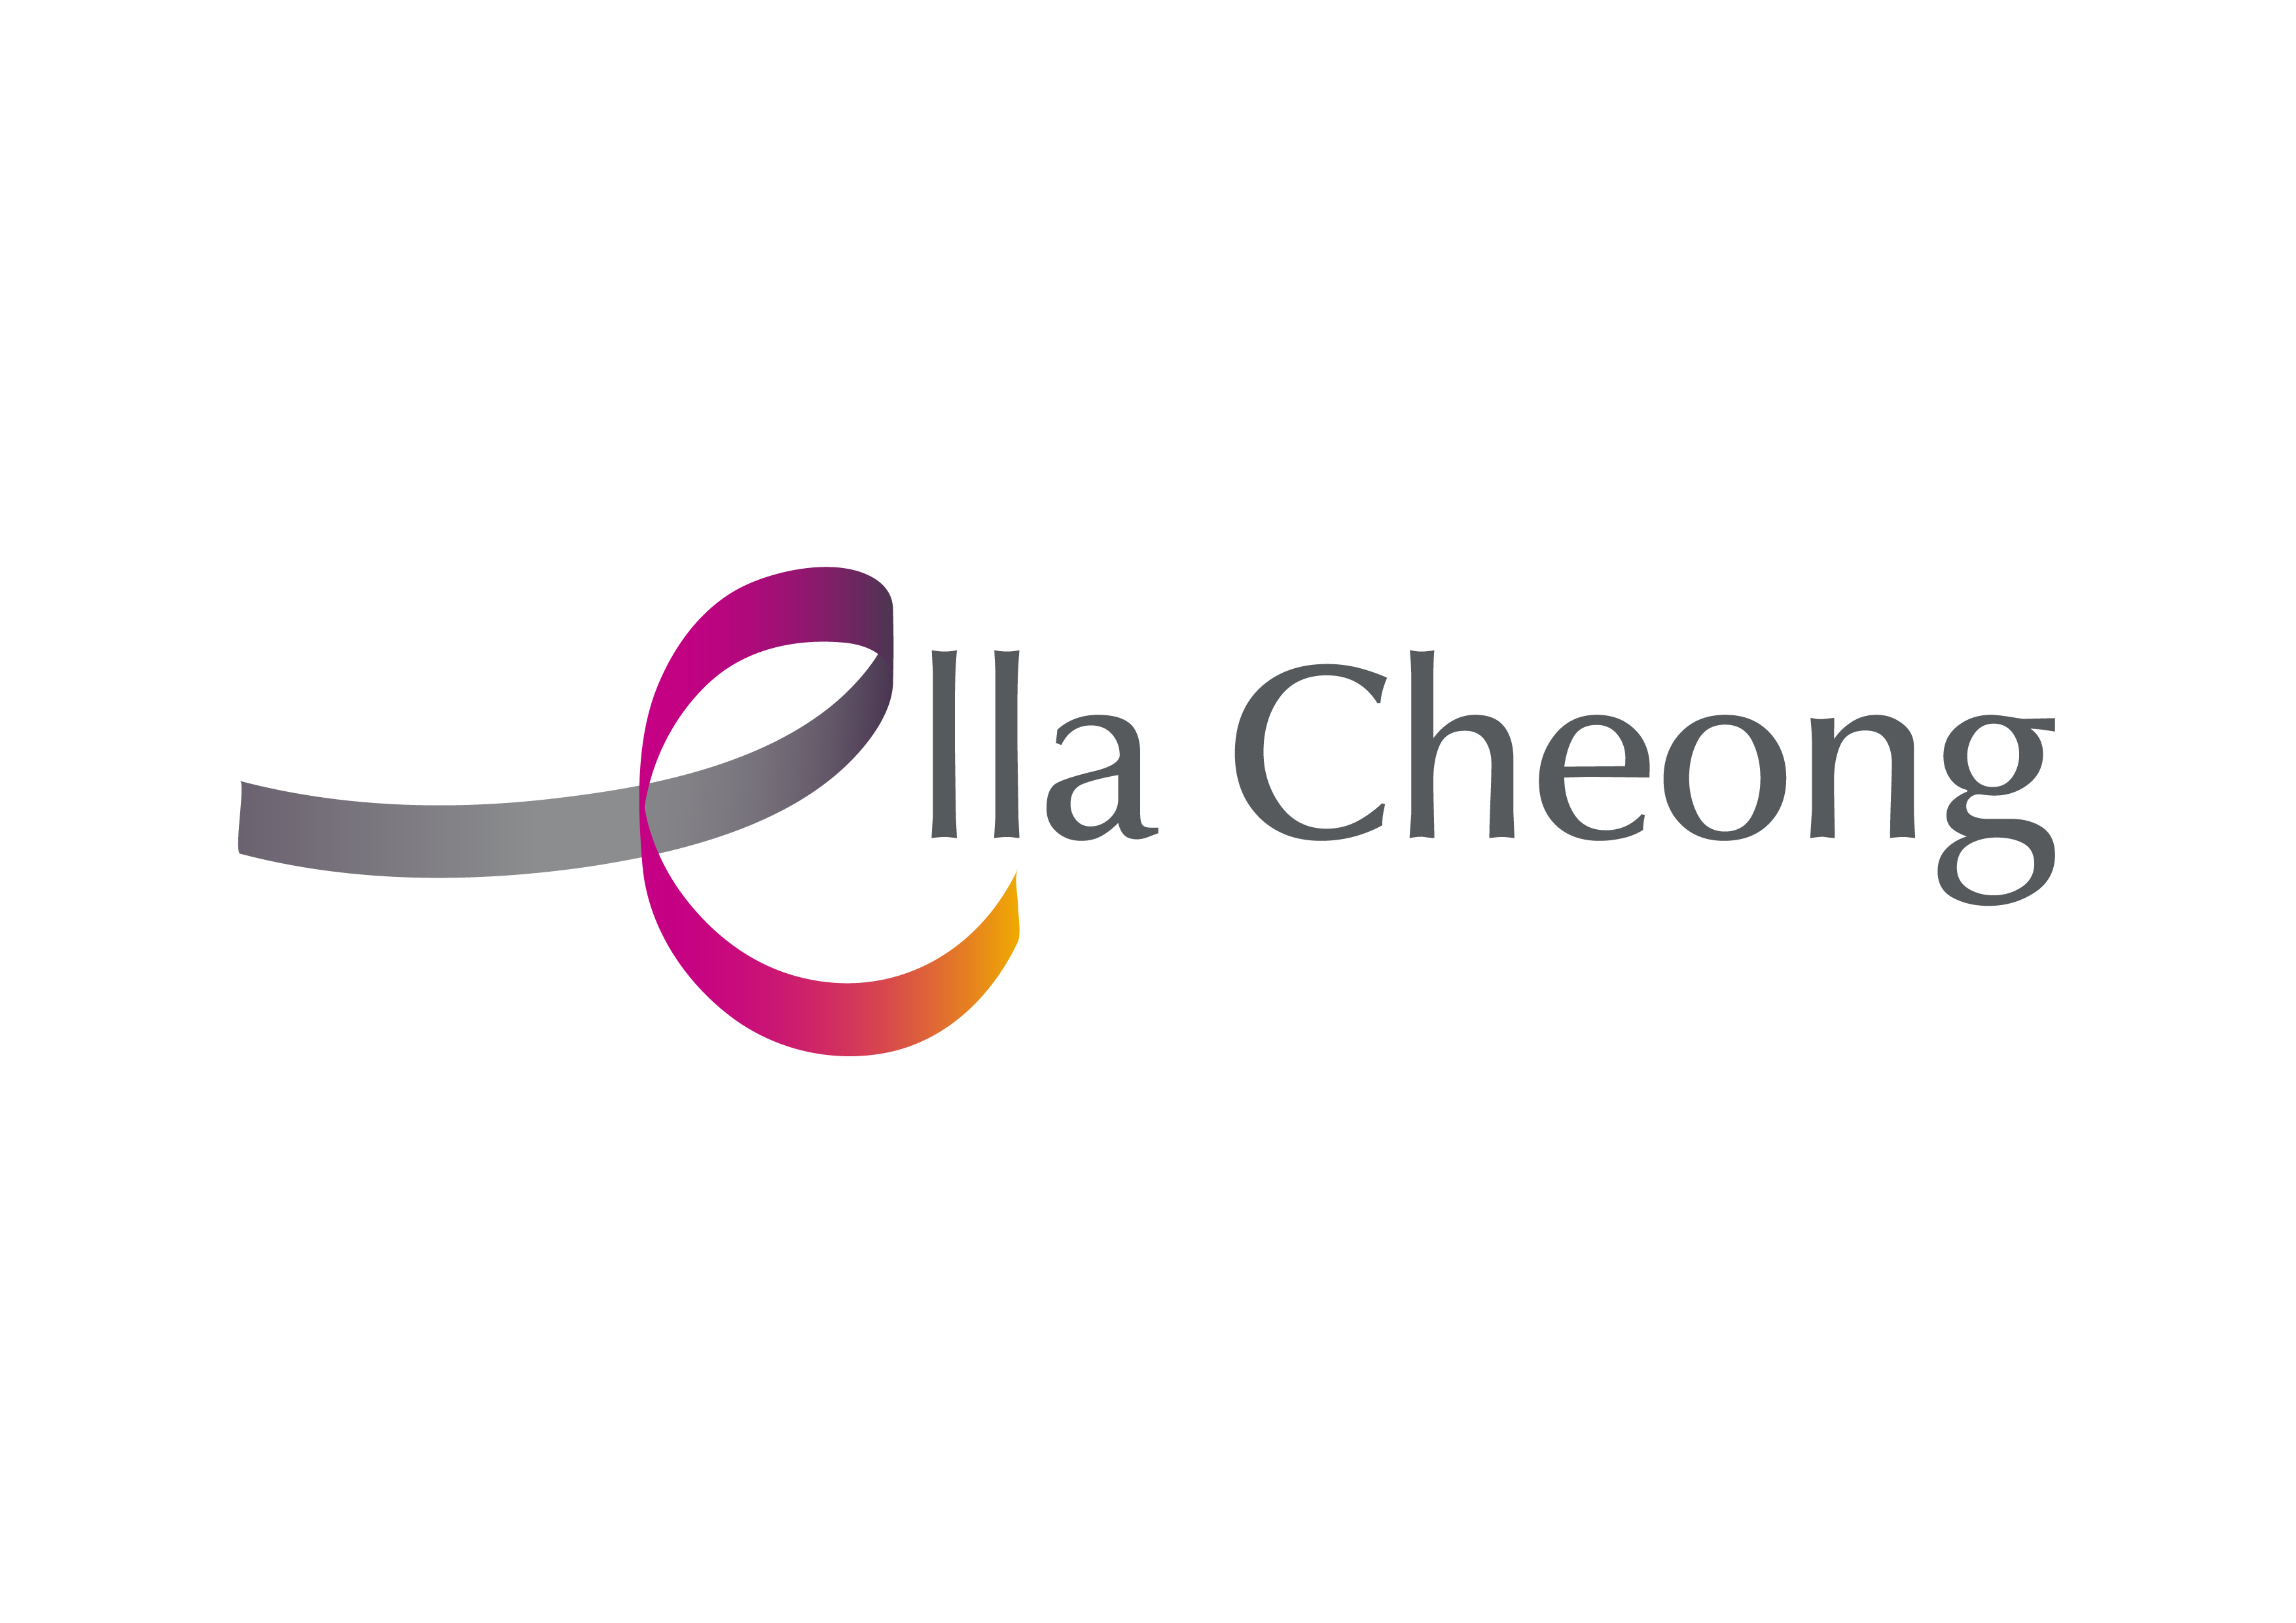 Ella Cheong Llc company logo